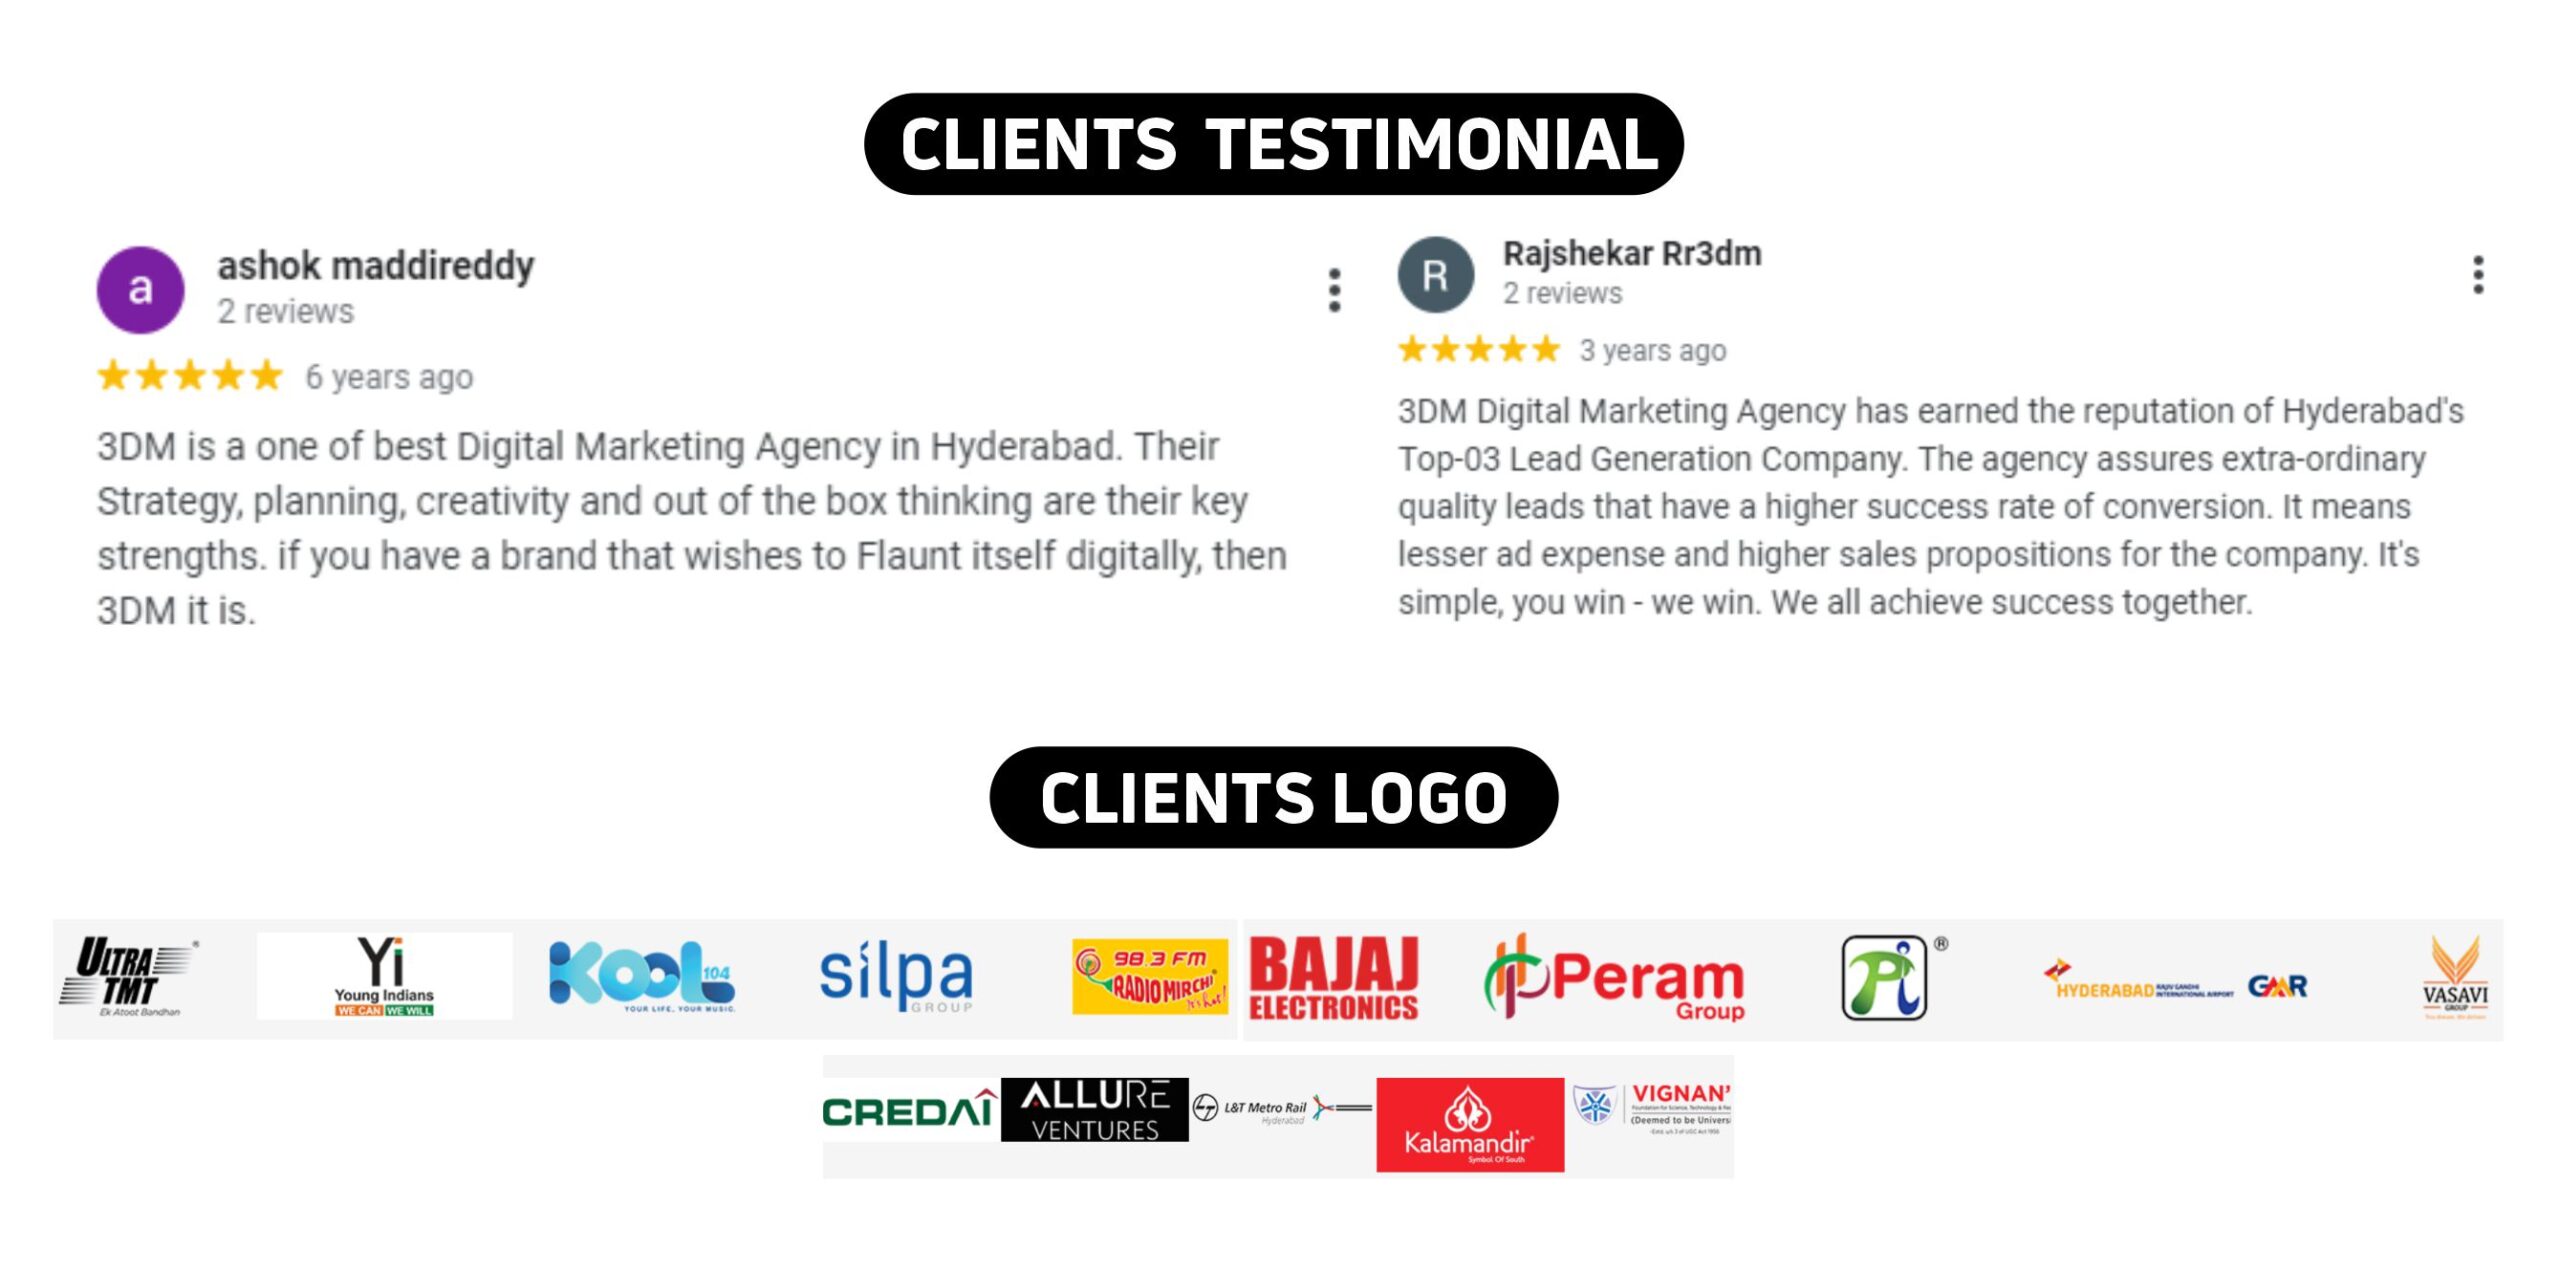 3DM - Digital Marketing Agency Clients Testimonials & Logos